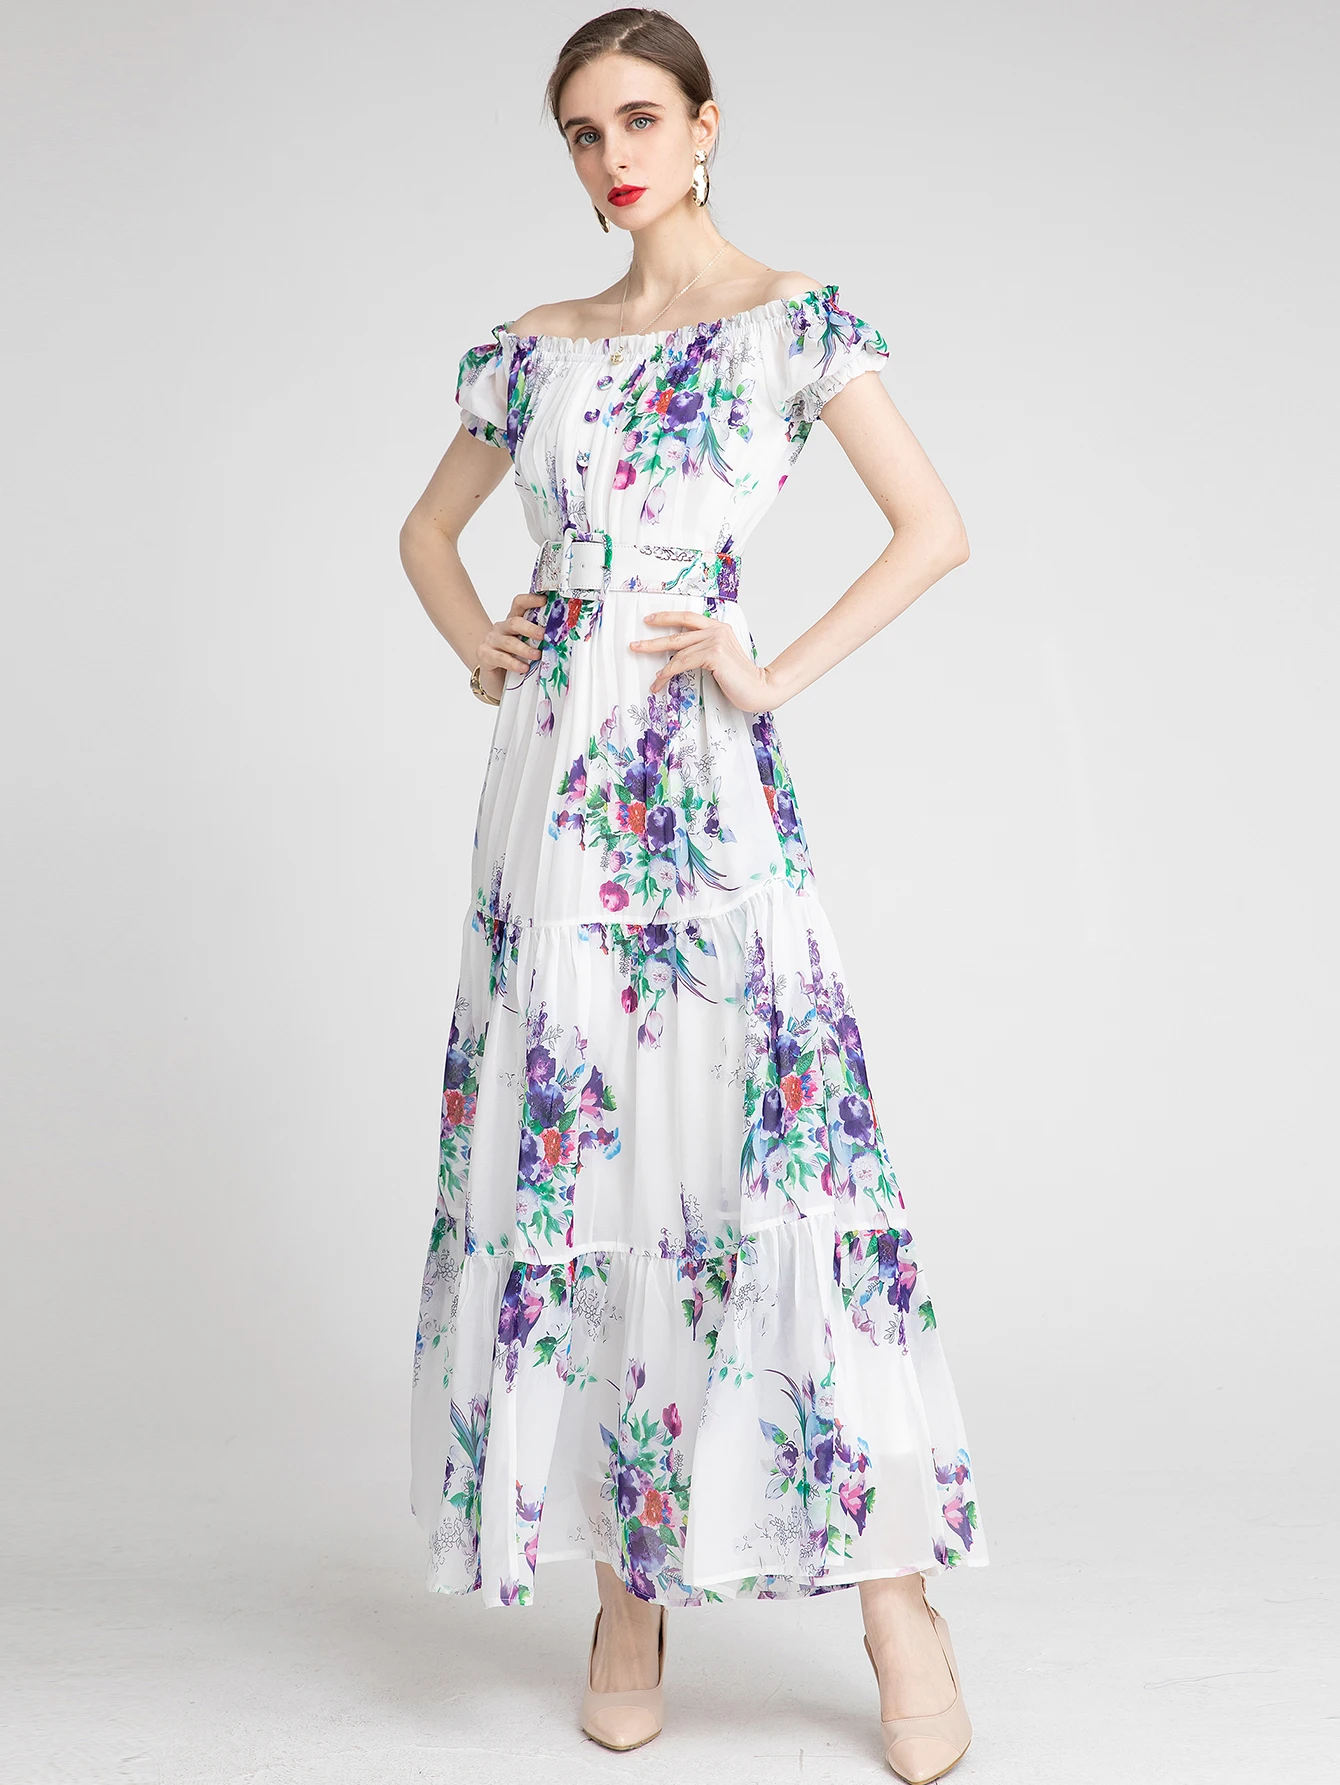 

MoaaYina Fashion Designer dress Summer Woman Dress Short sleeve Sashes Flower Print Bohemian Vacation Elegant Dress